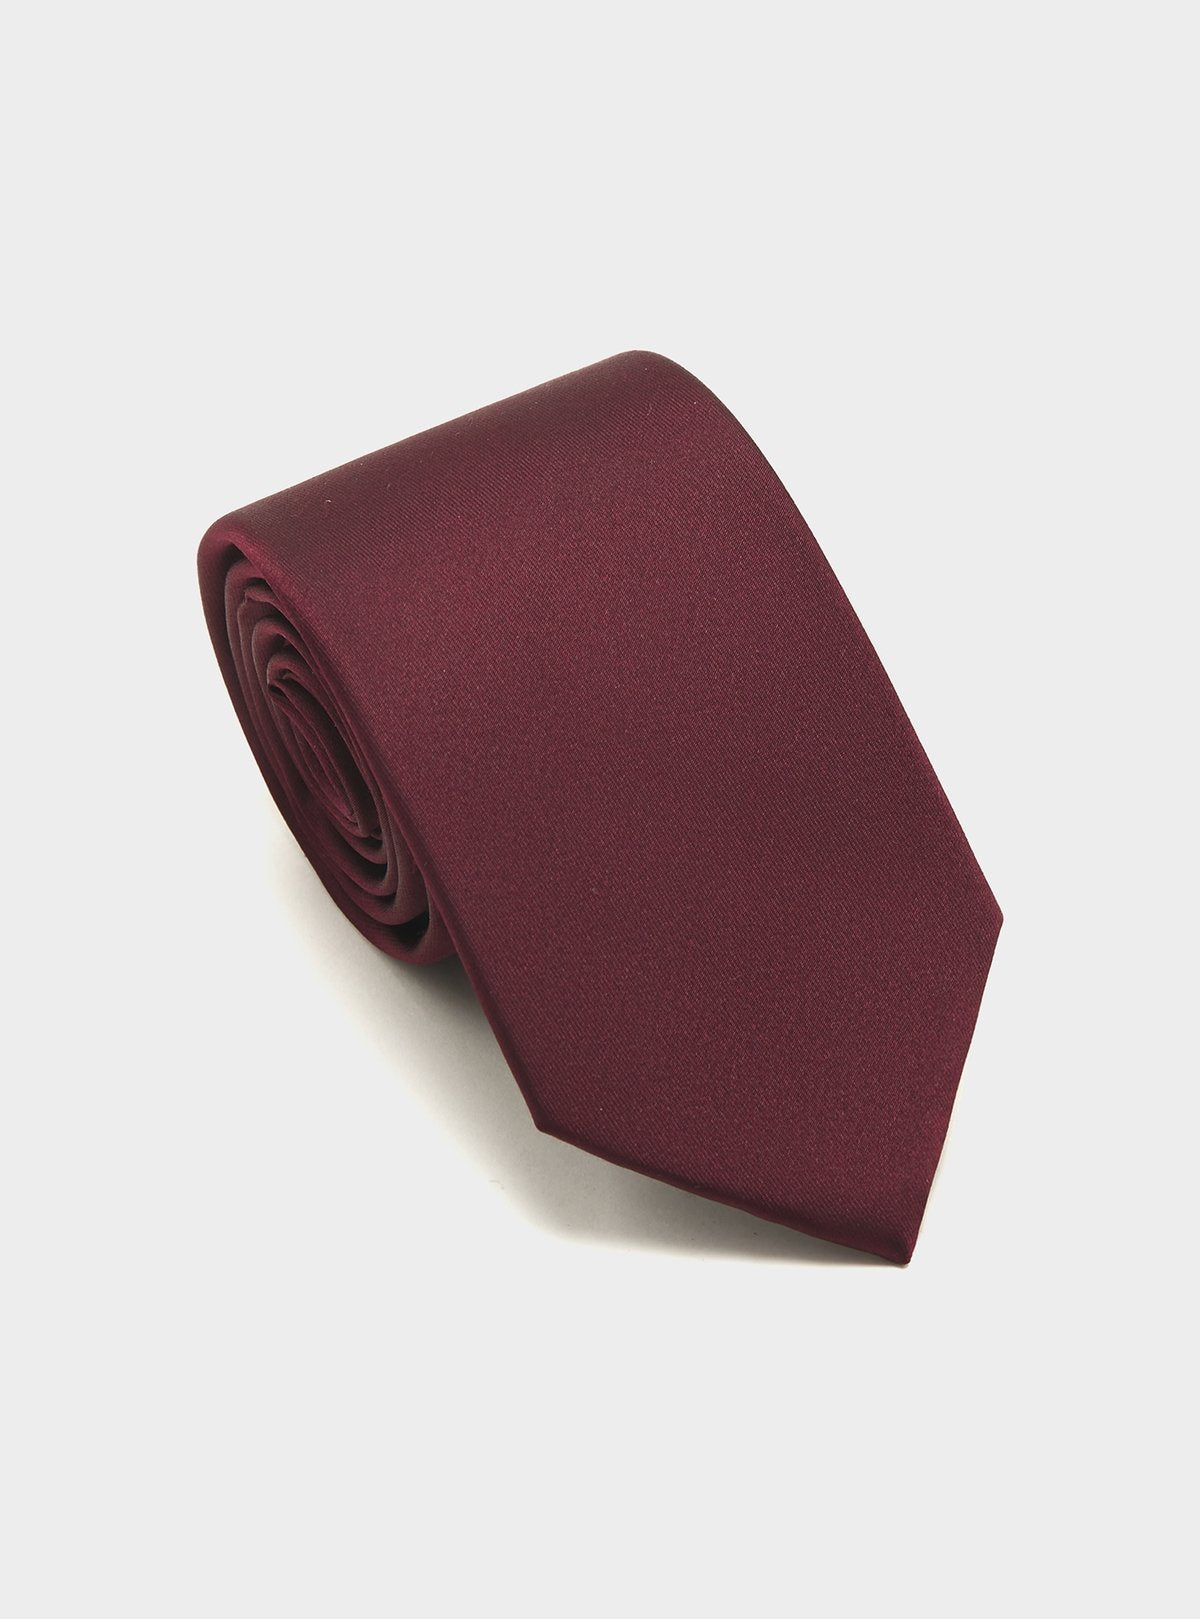 Cravatta seta unito product